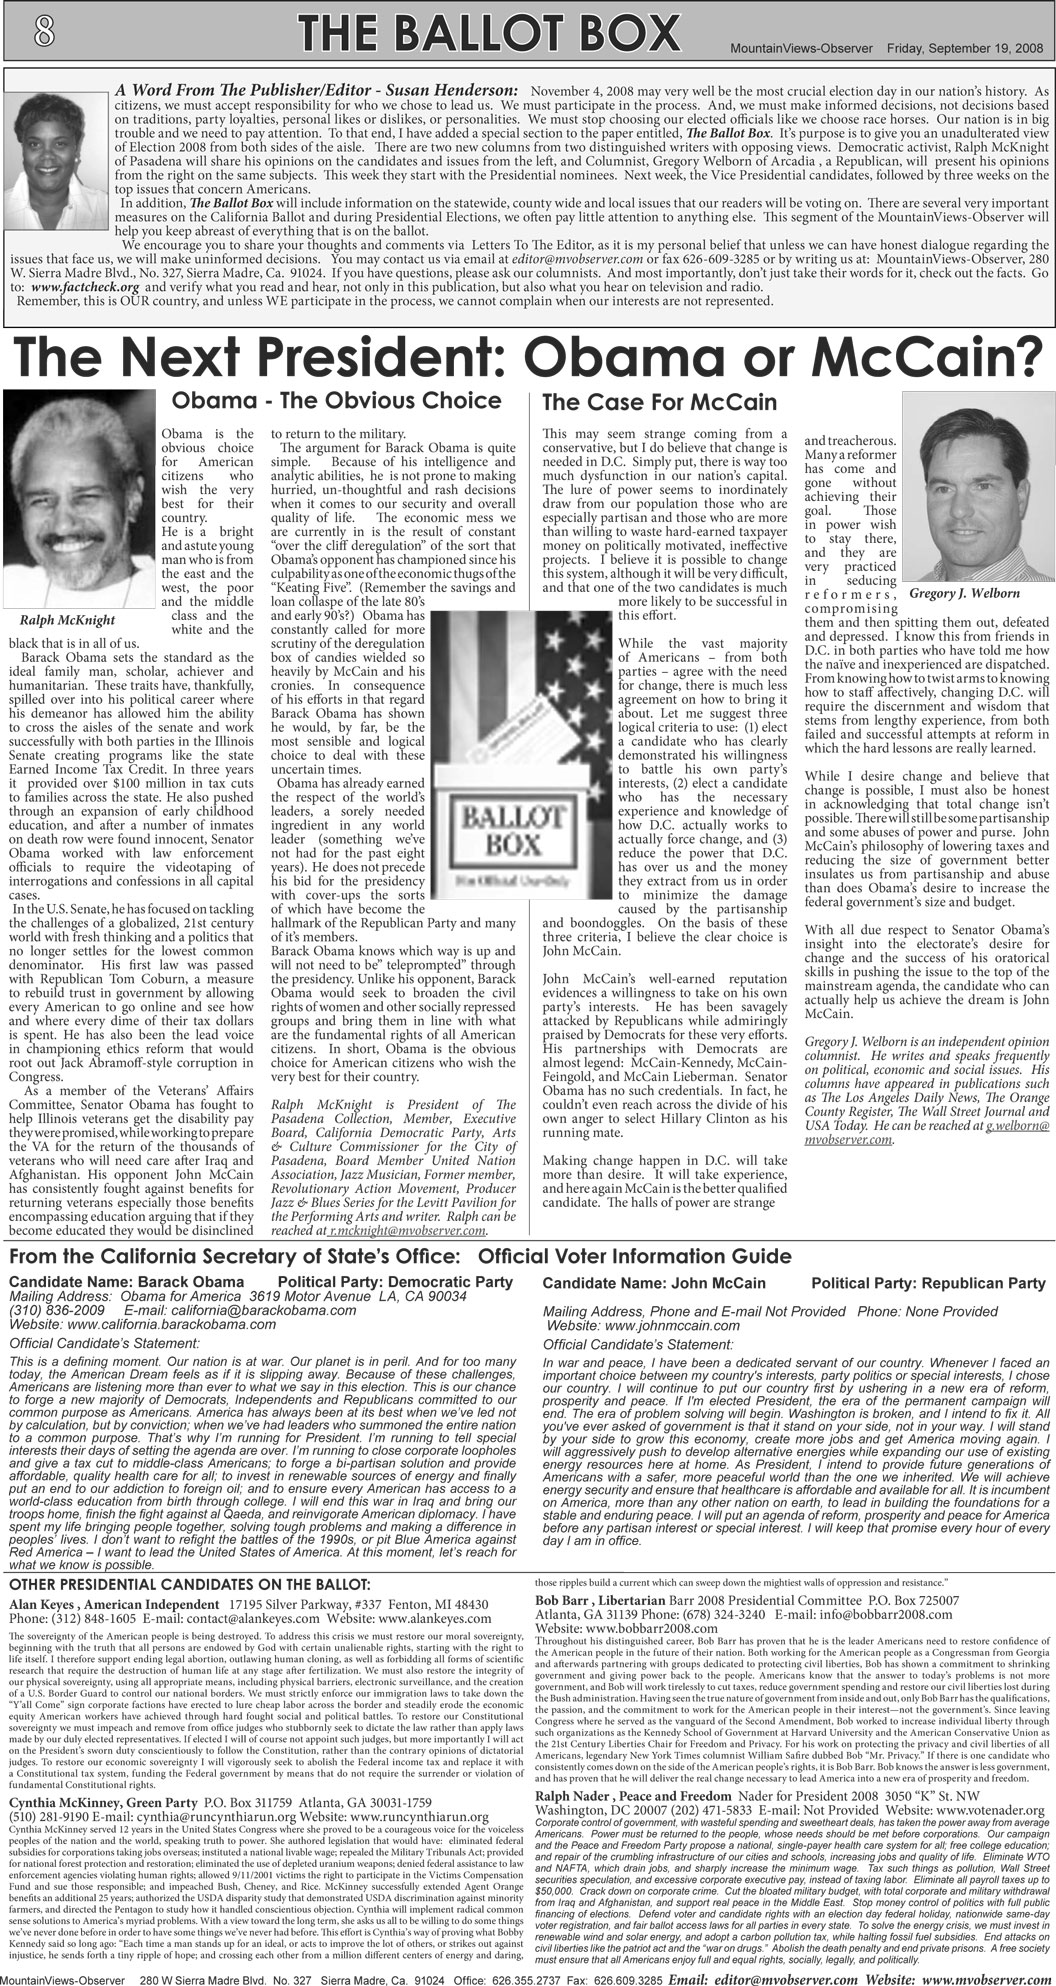 newspaper page